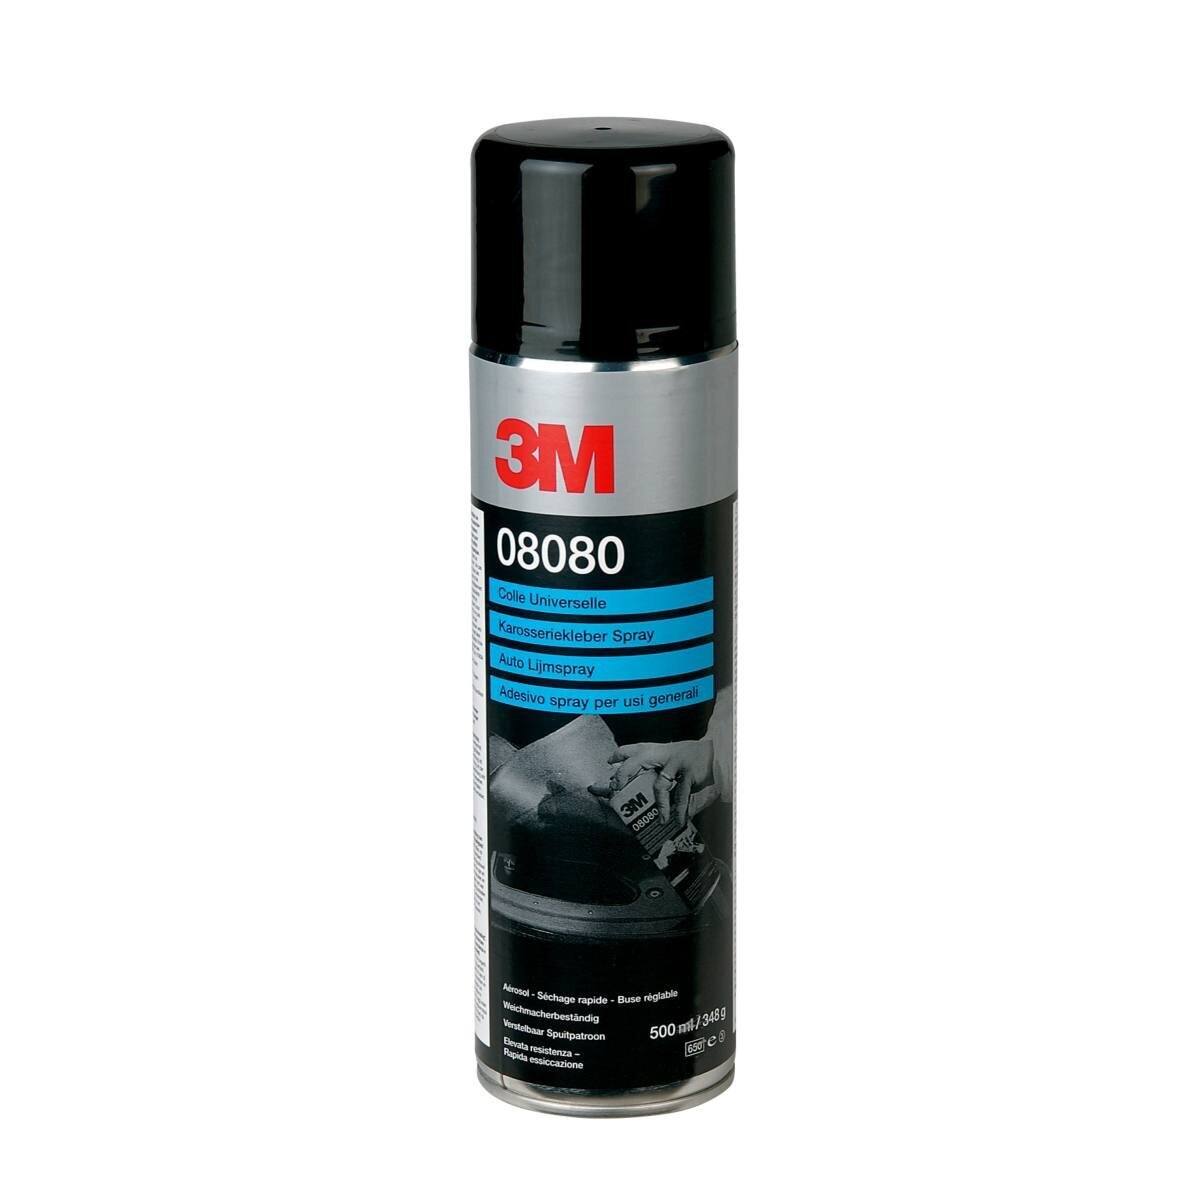 3M Body Adhesive Spray, 500 ml #08080